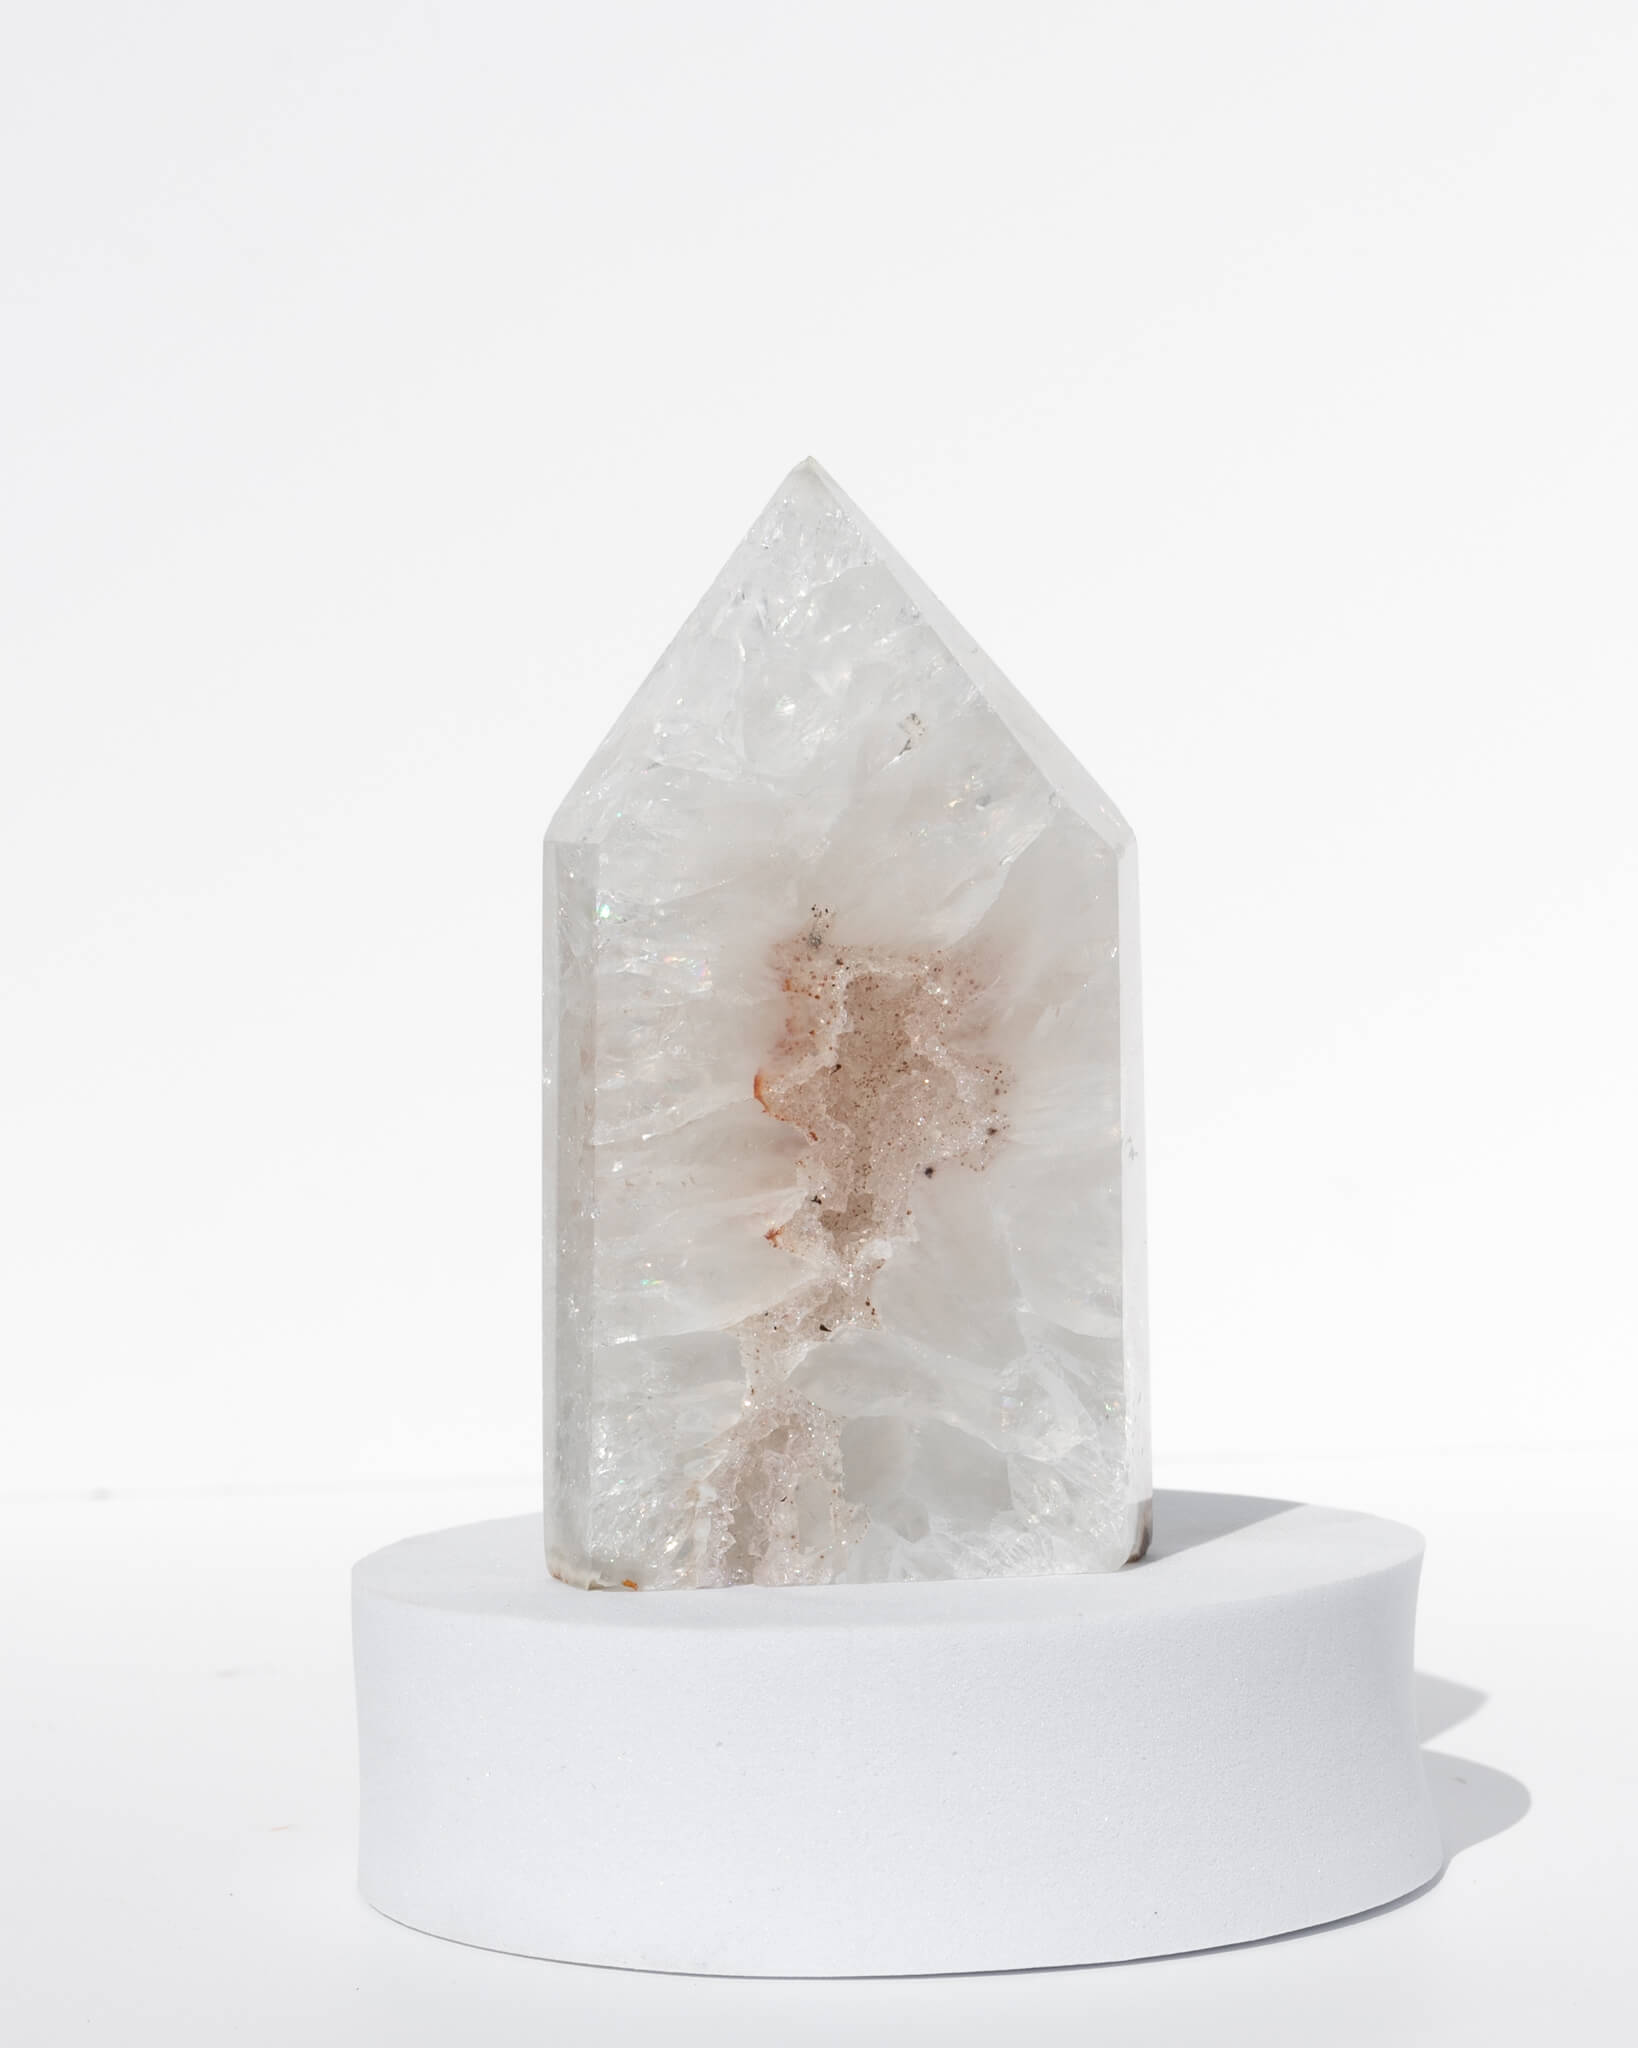 Druzy Agate Tower Healing Crystal